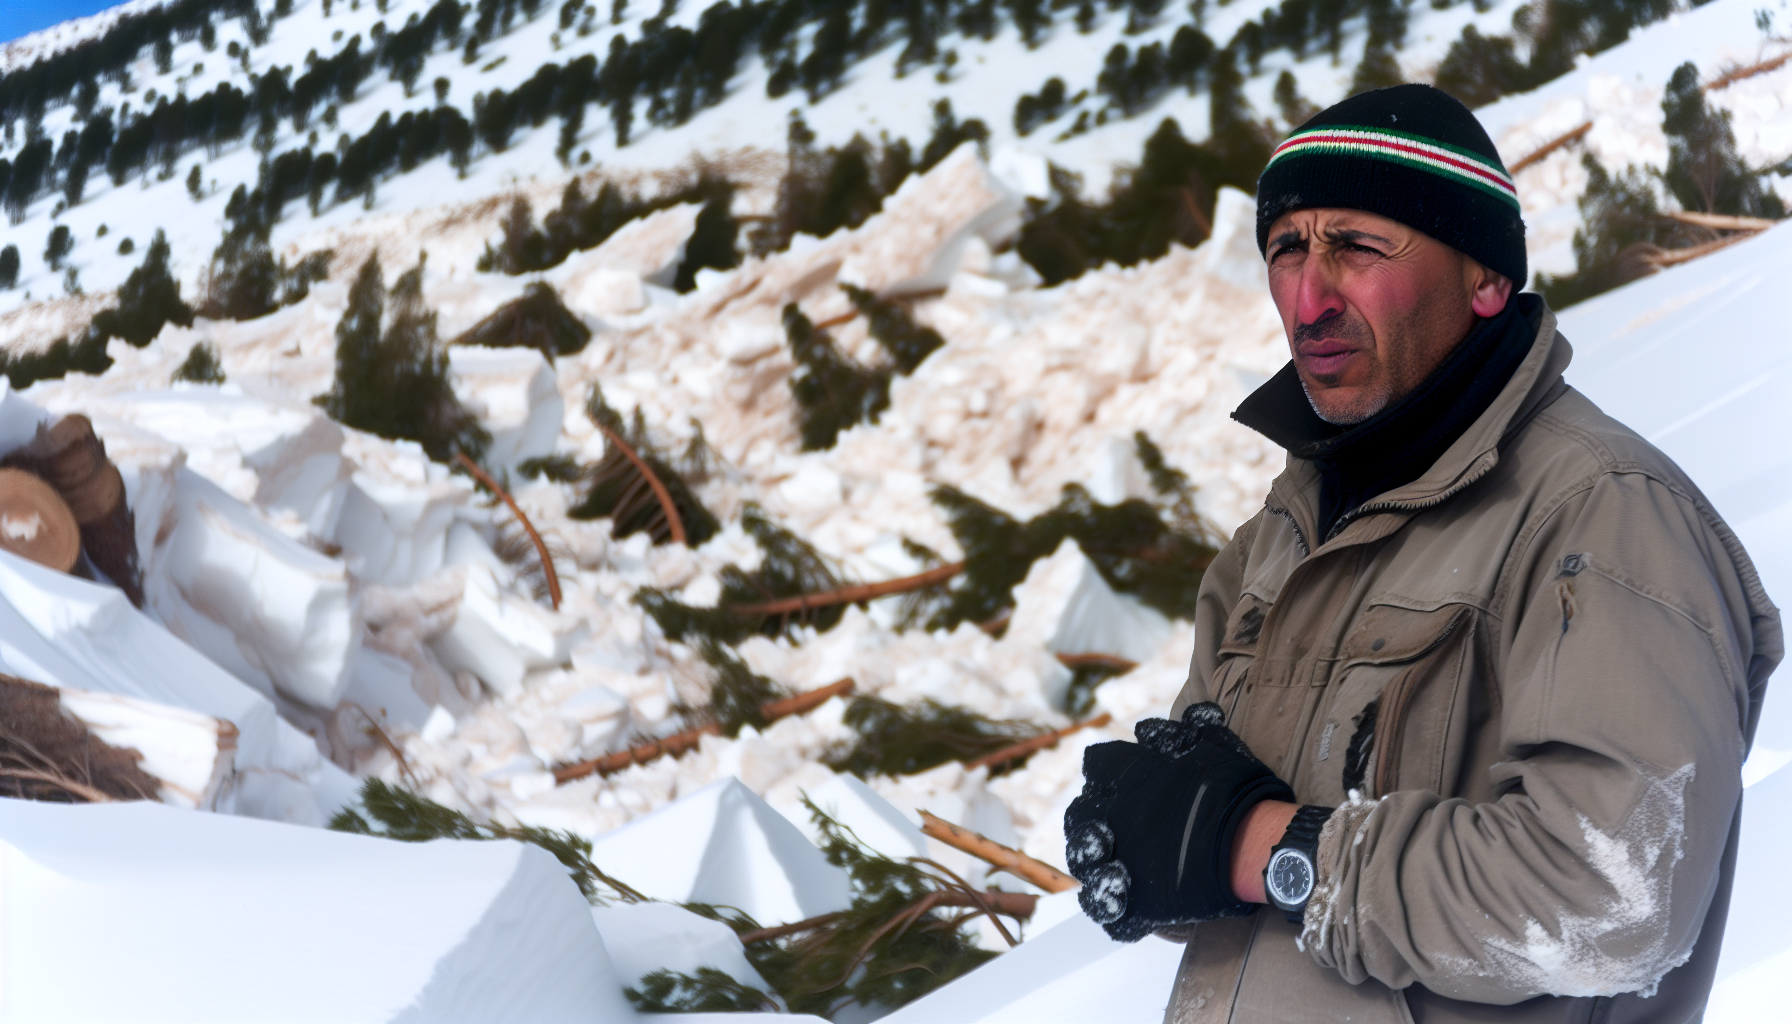 a man surveys damage after an avalanche